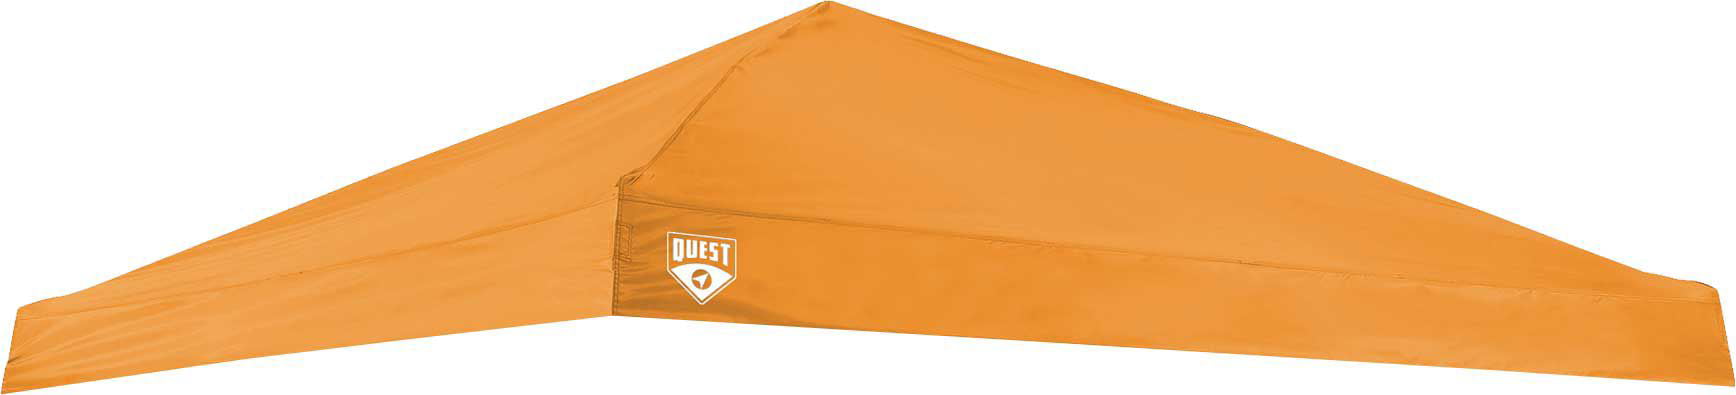 Quest 10' x 10' Replacement Canopy Top - Walmart.com ...